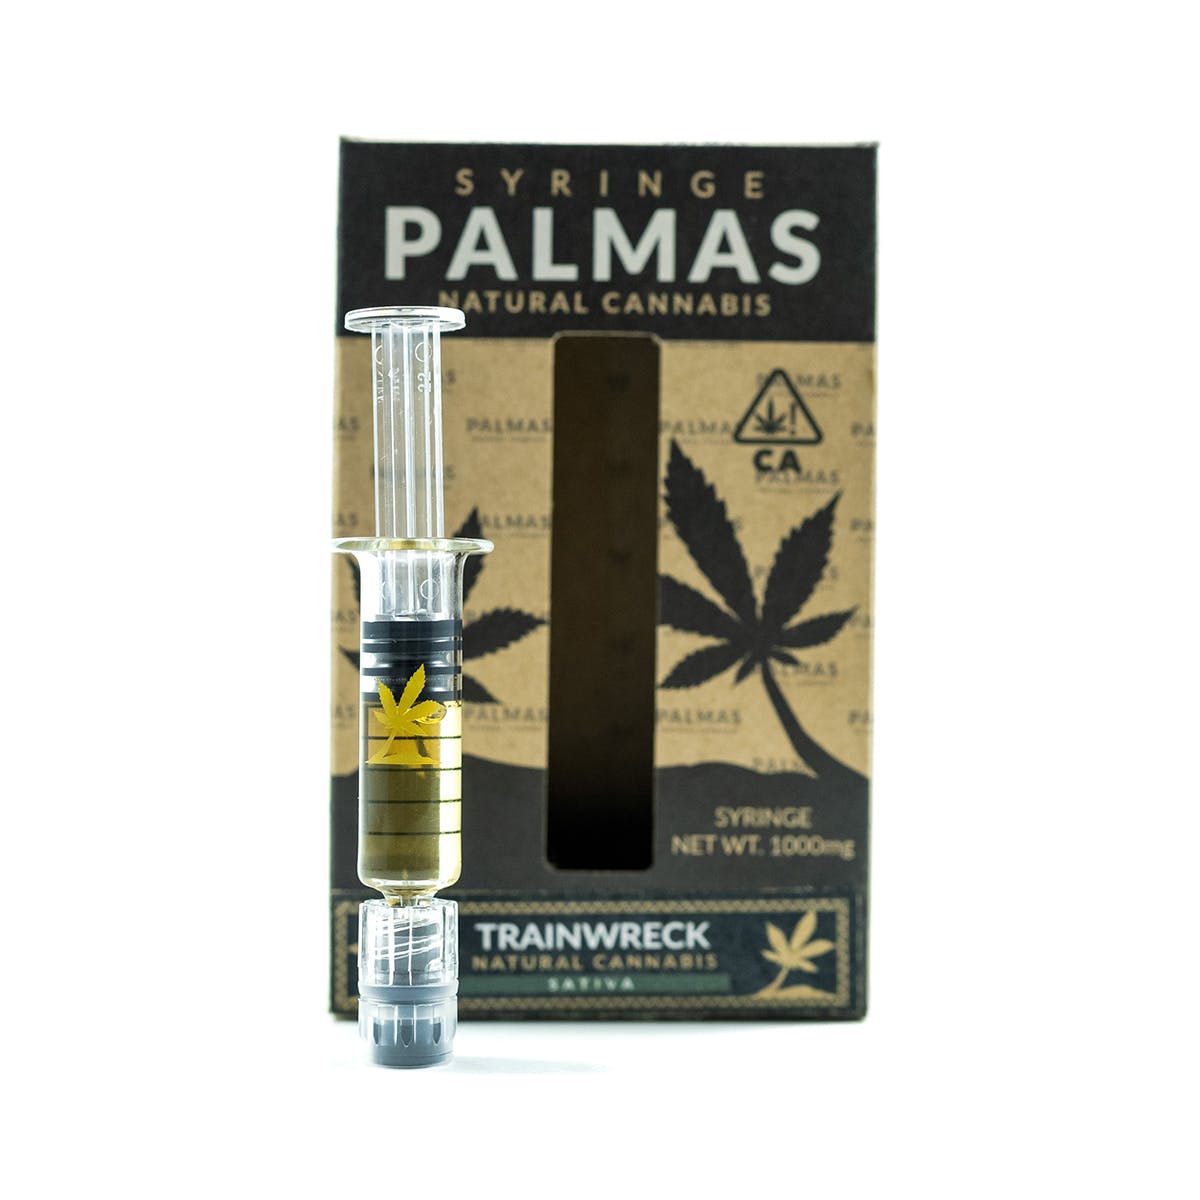 concentrate-palmas-cannabis-palmas-syringe-trainwreck-1000mg